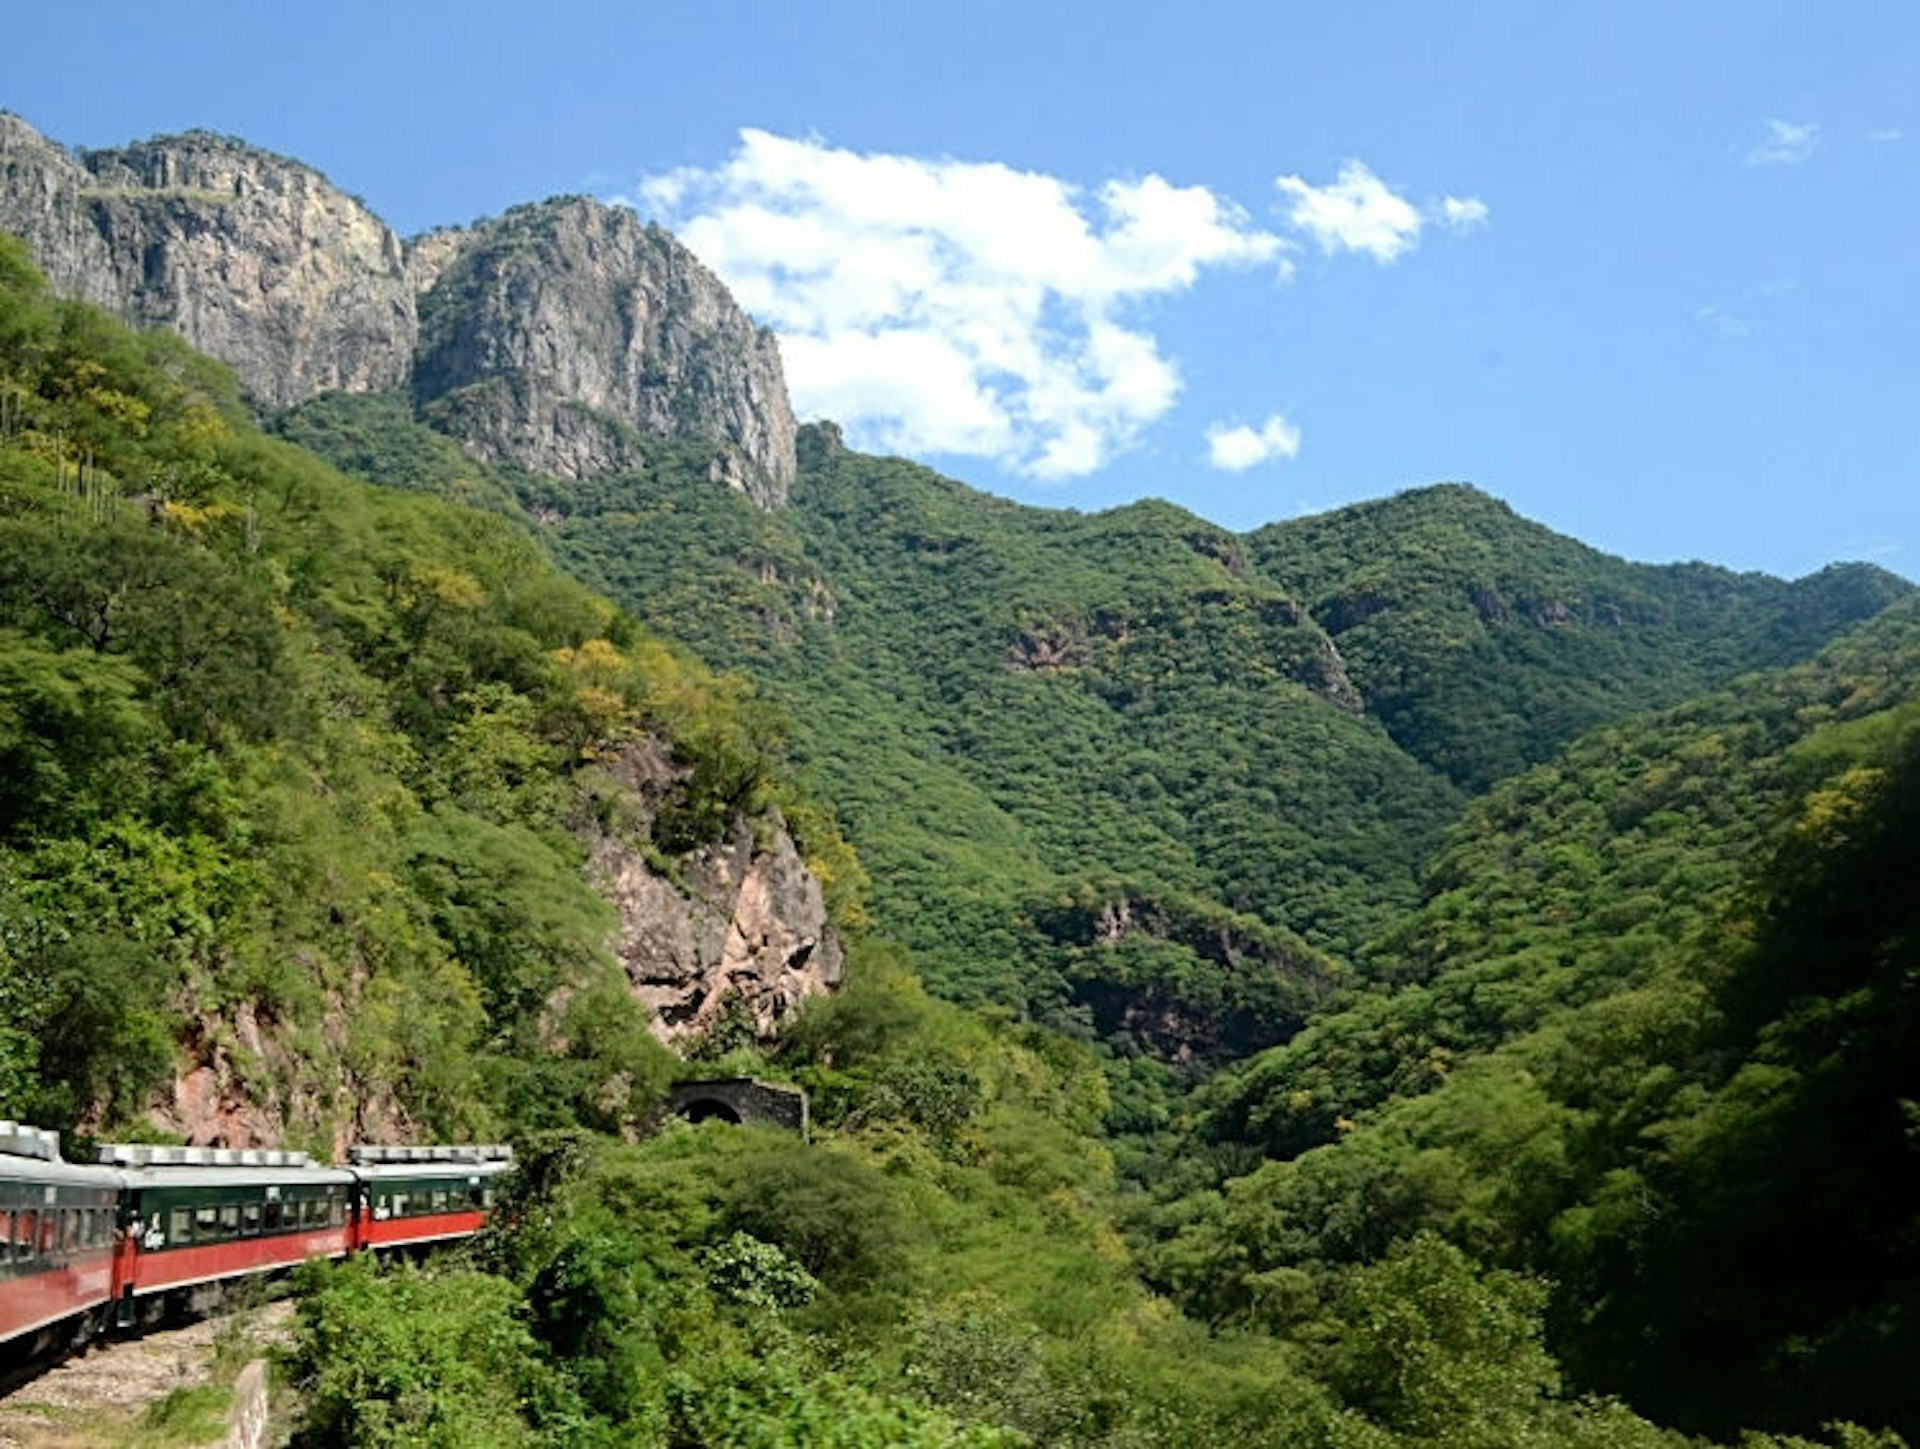 The train ride through Copper Canyon (Barranco del Cobre) offers wonderful views. Image by Justin Vidamo / CC BY 2.0